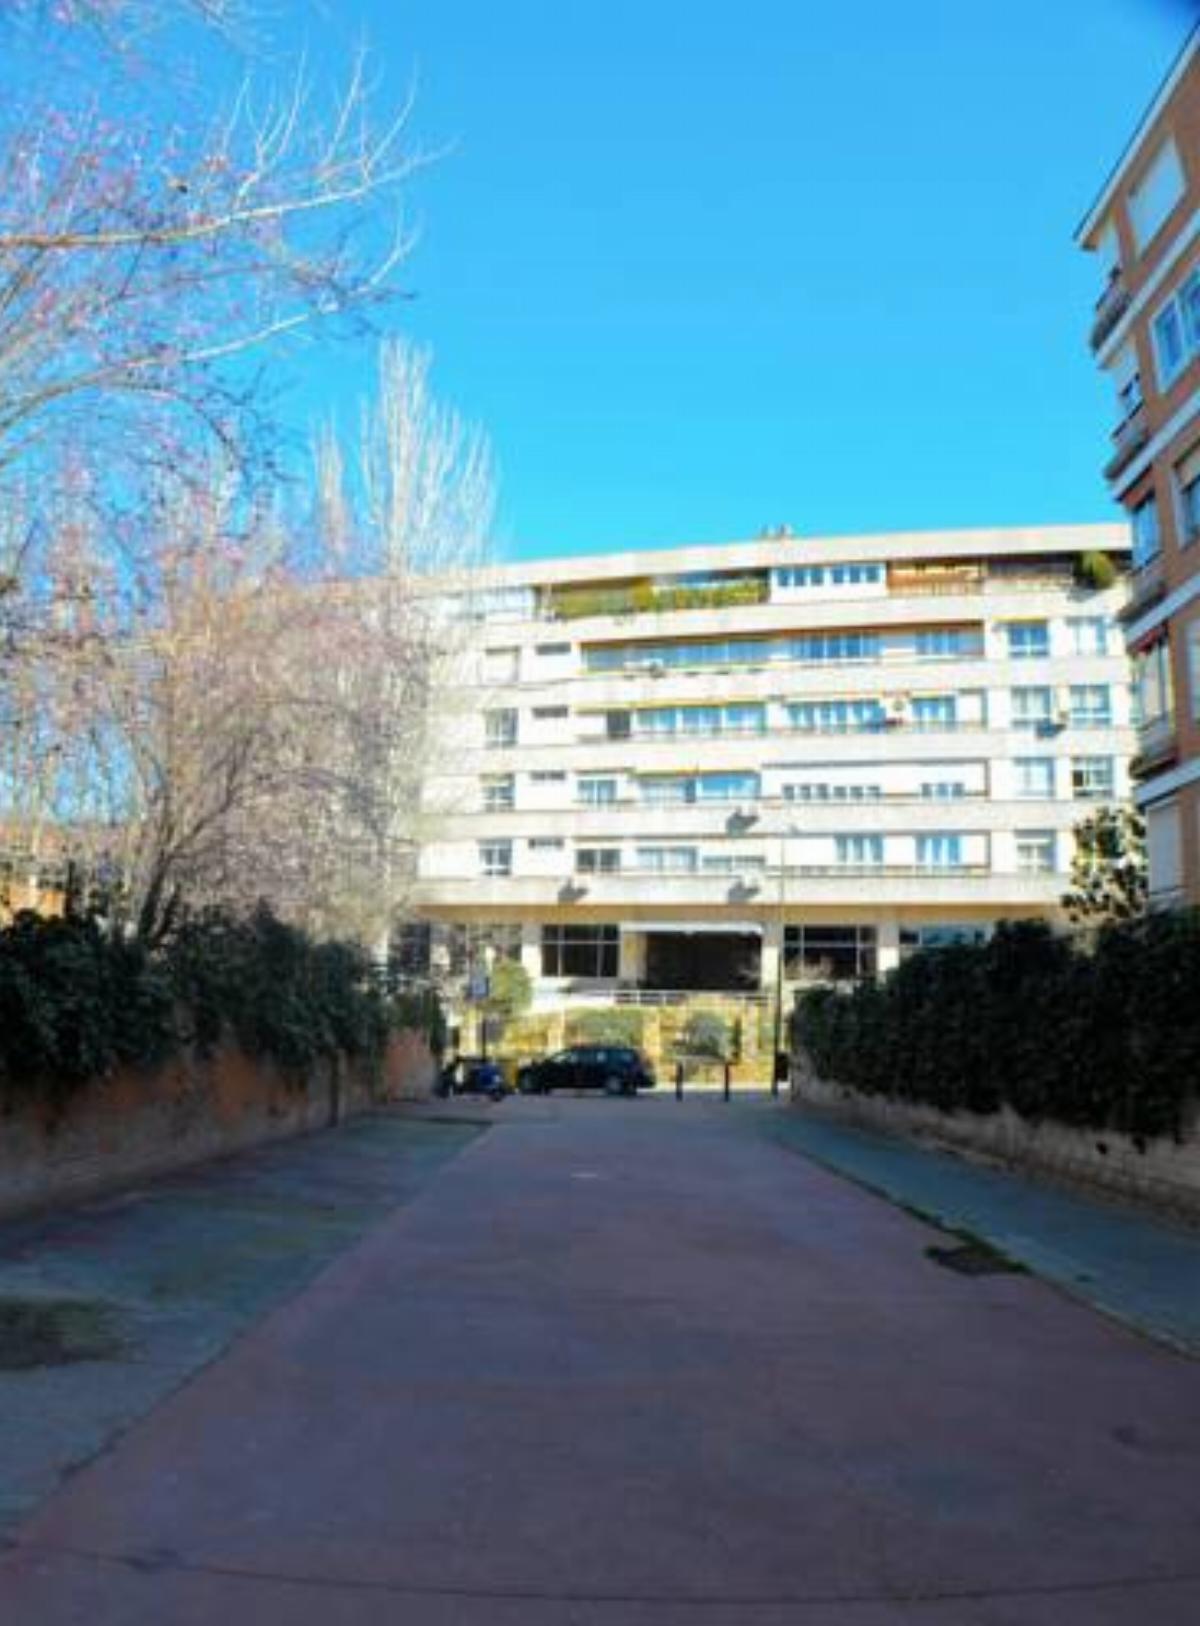 My City Home Puerta Hierro Design Duplex Hotel Madrid Spain